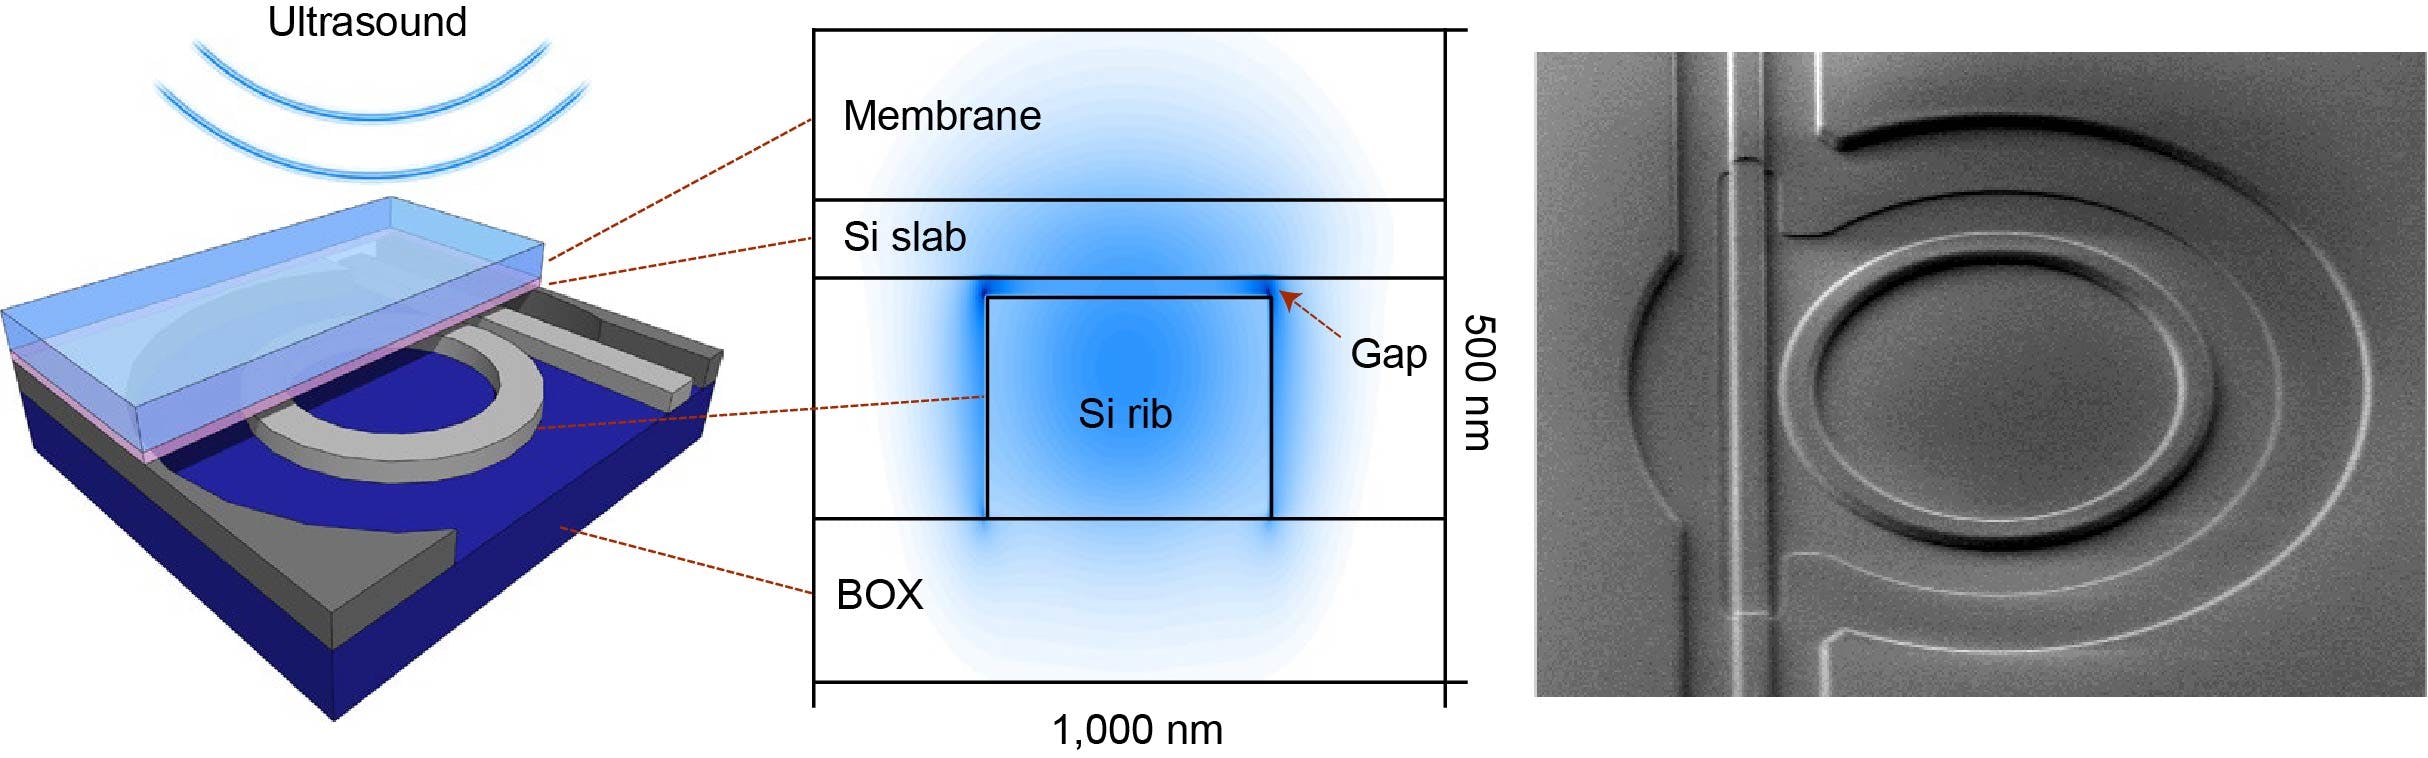 Figure 3. Cross-section and SEM image of imec’s opto-mechanical ultrasound sensor.